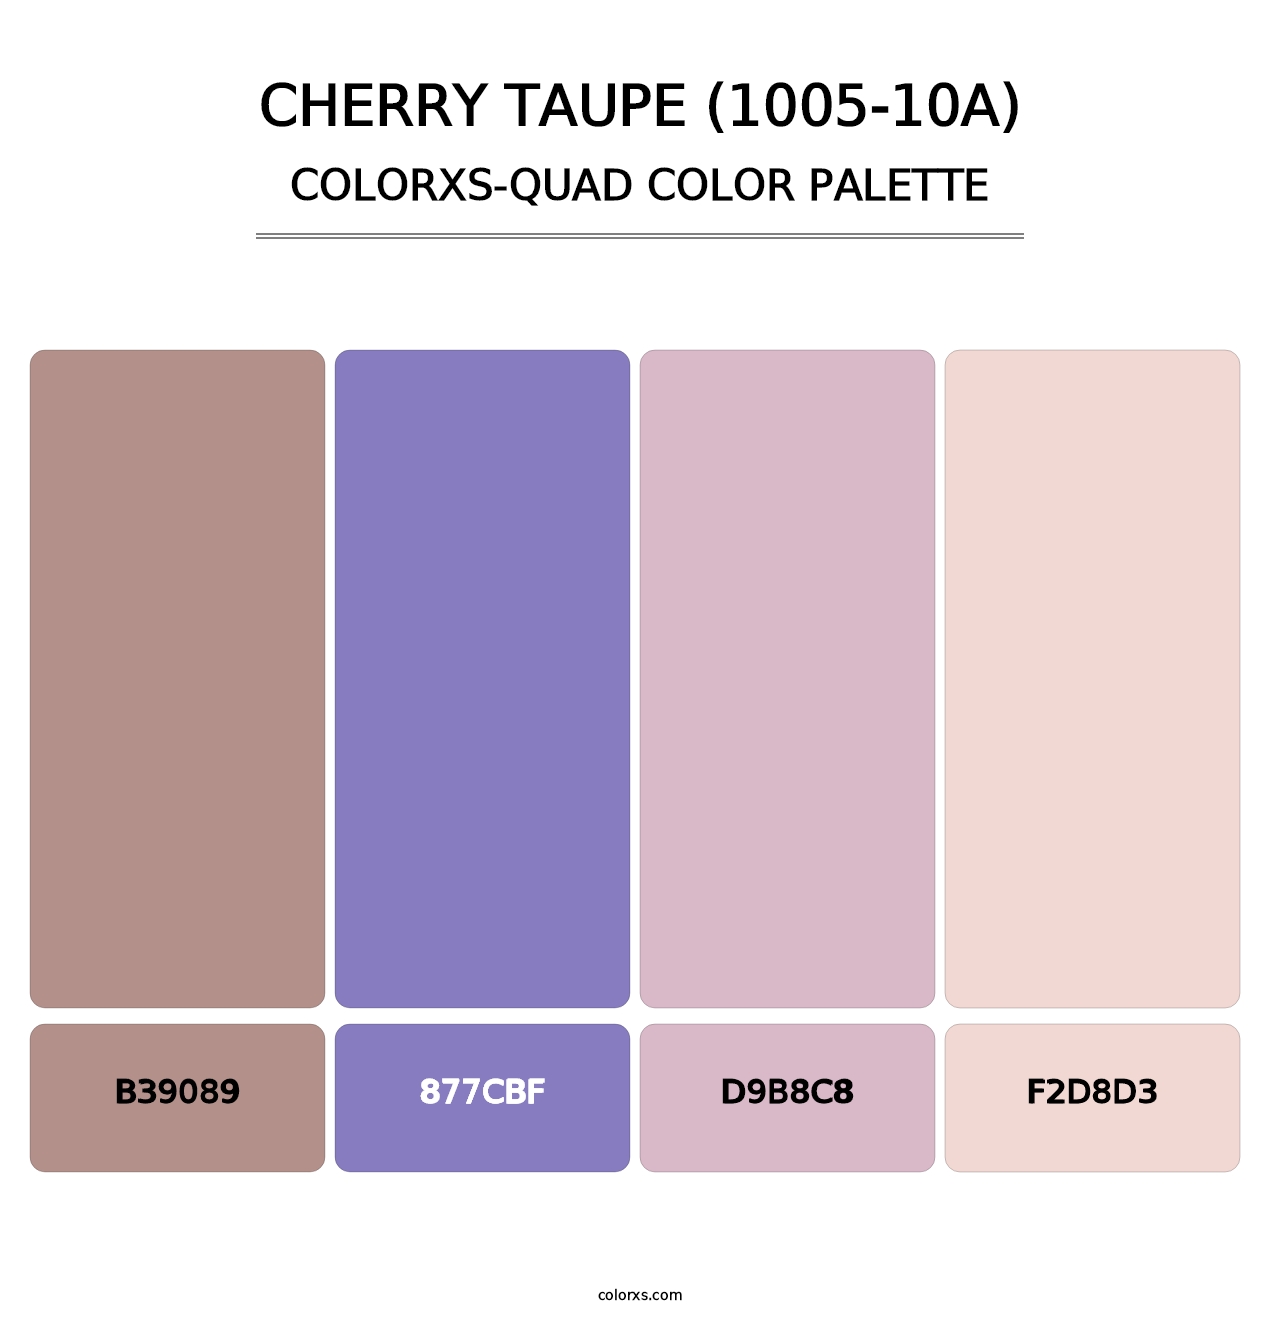 Cherry Taupe (1005-10A) - Colorxs Quad Palette